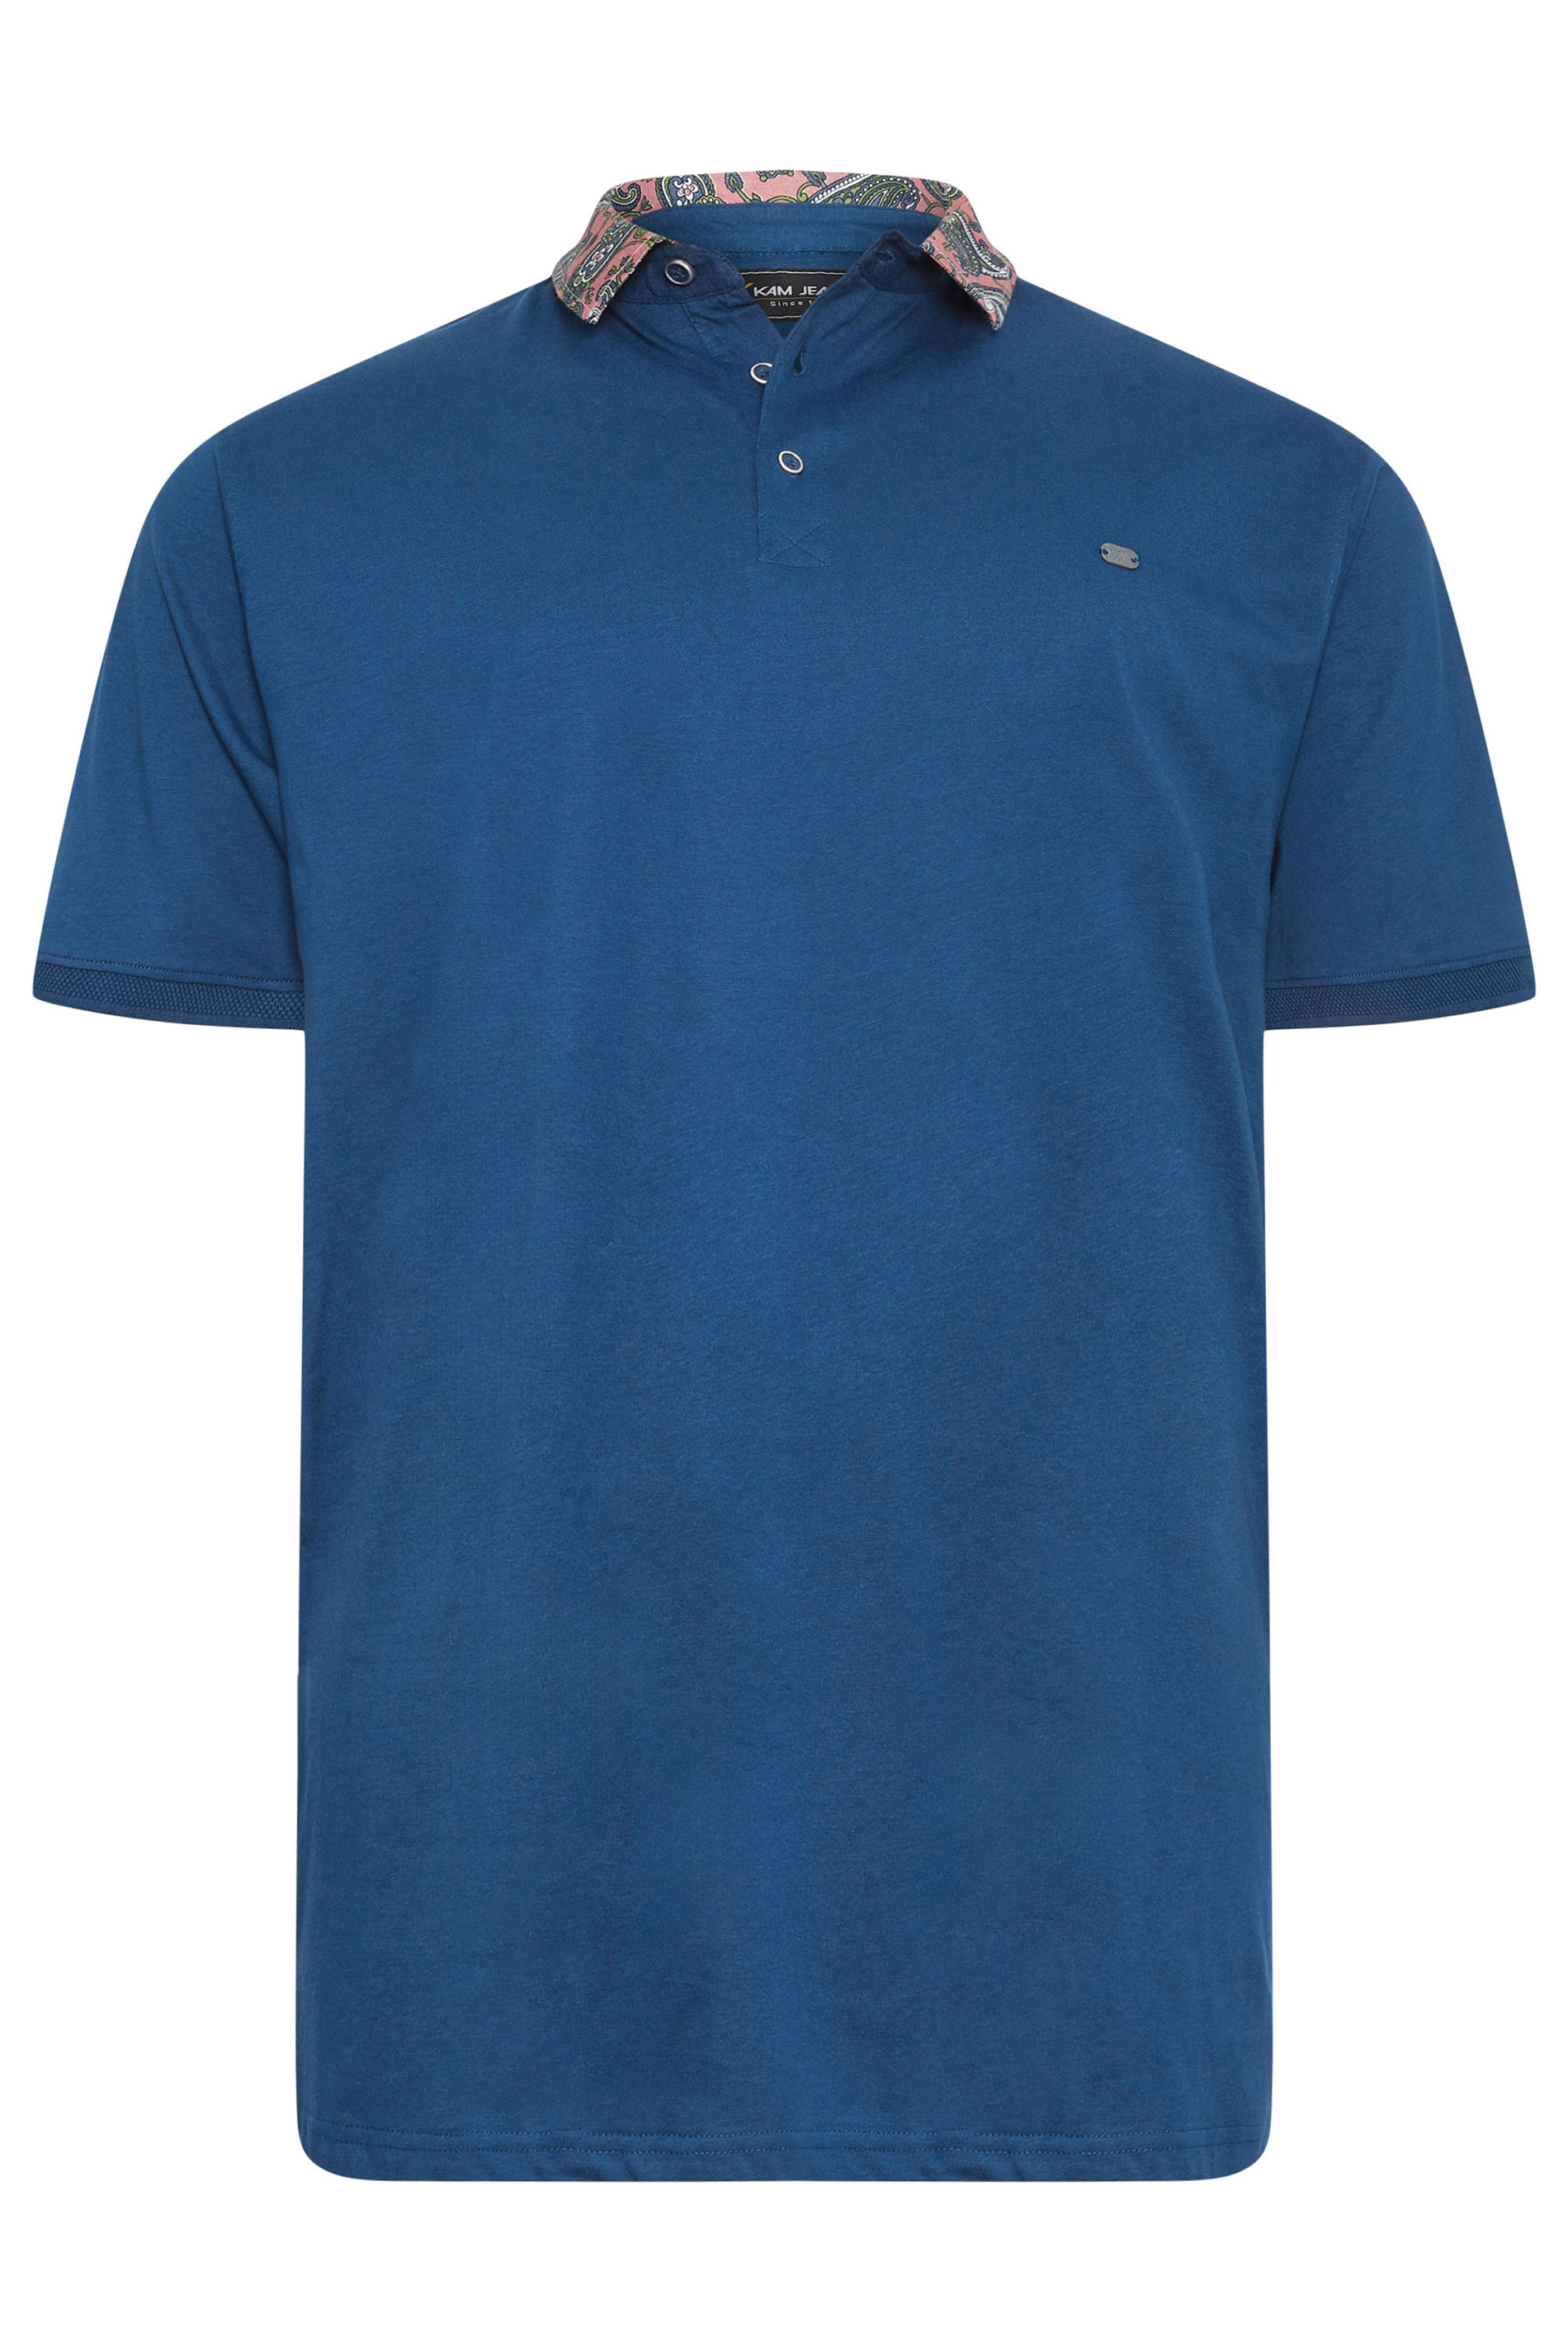 KAM Big & Tall Blue Jersey Floral Collar Polo Shirt | BadRhino 2